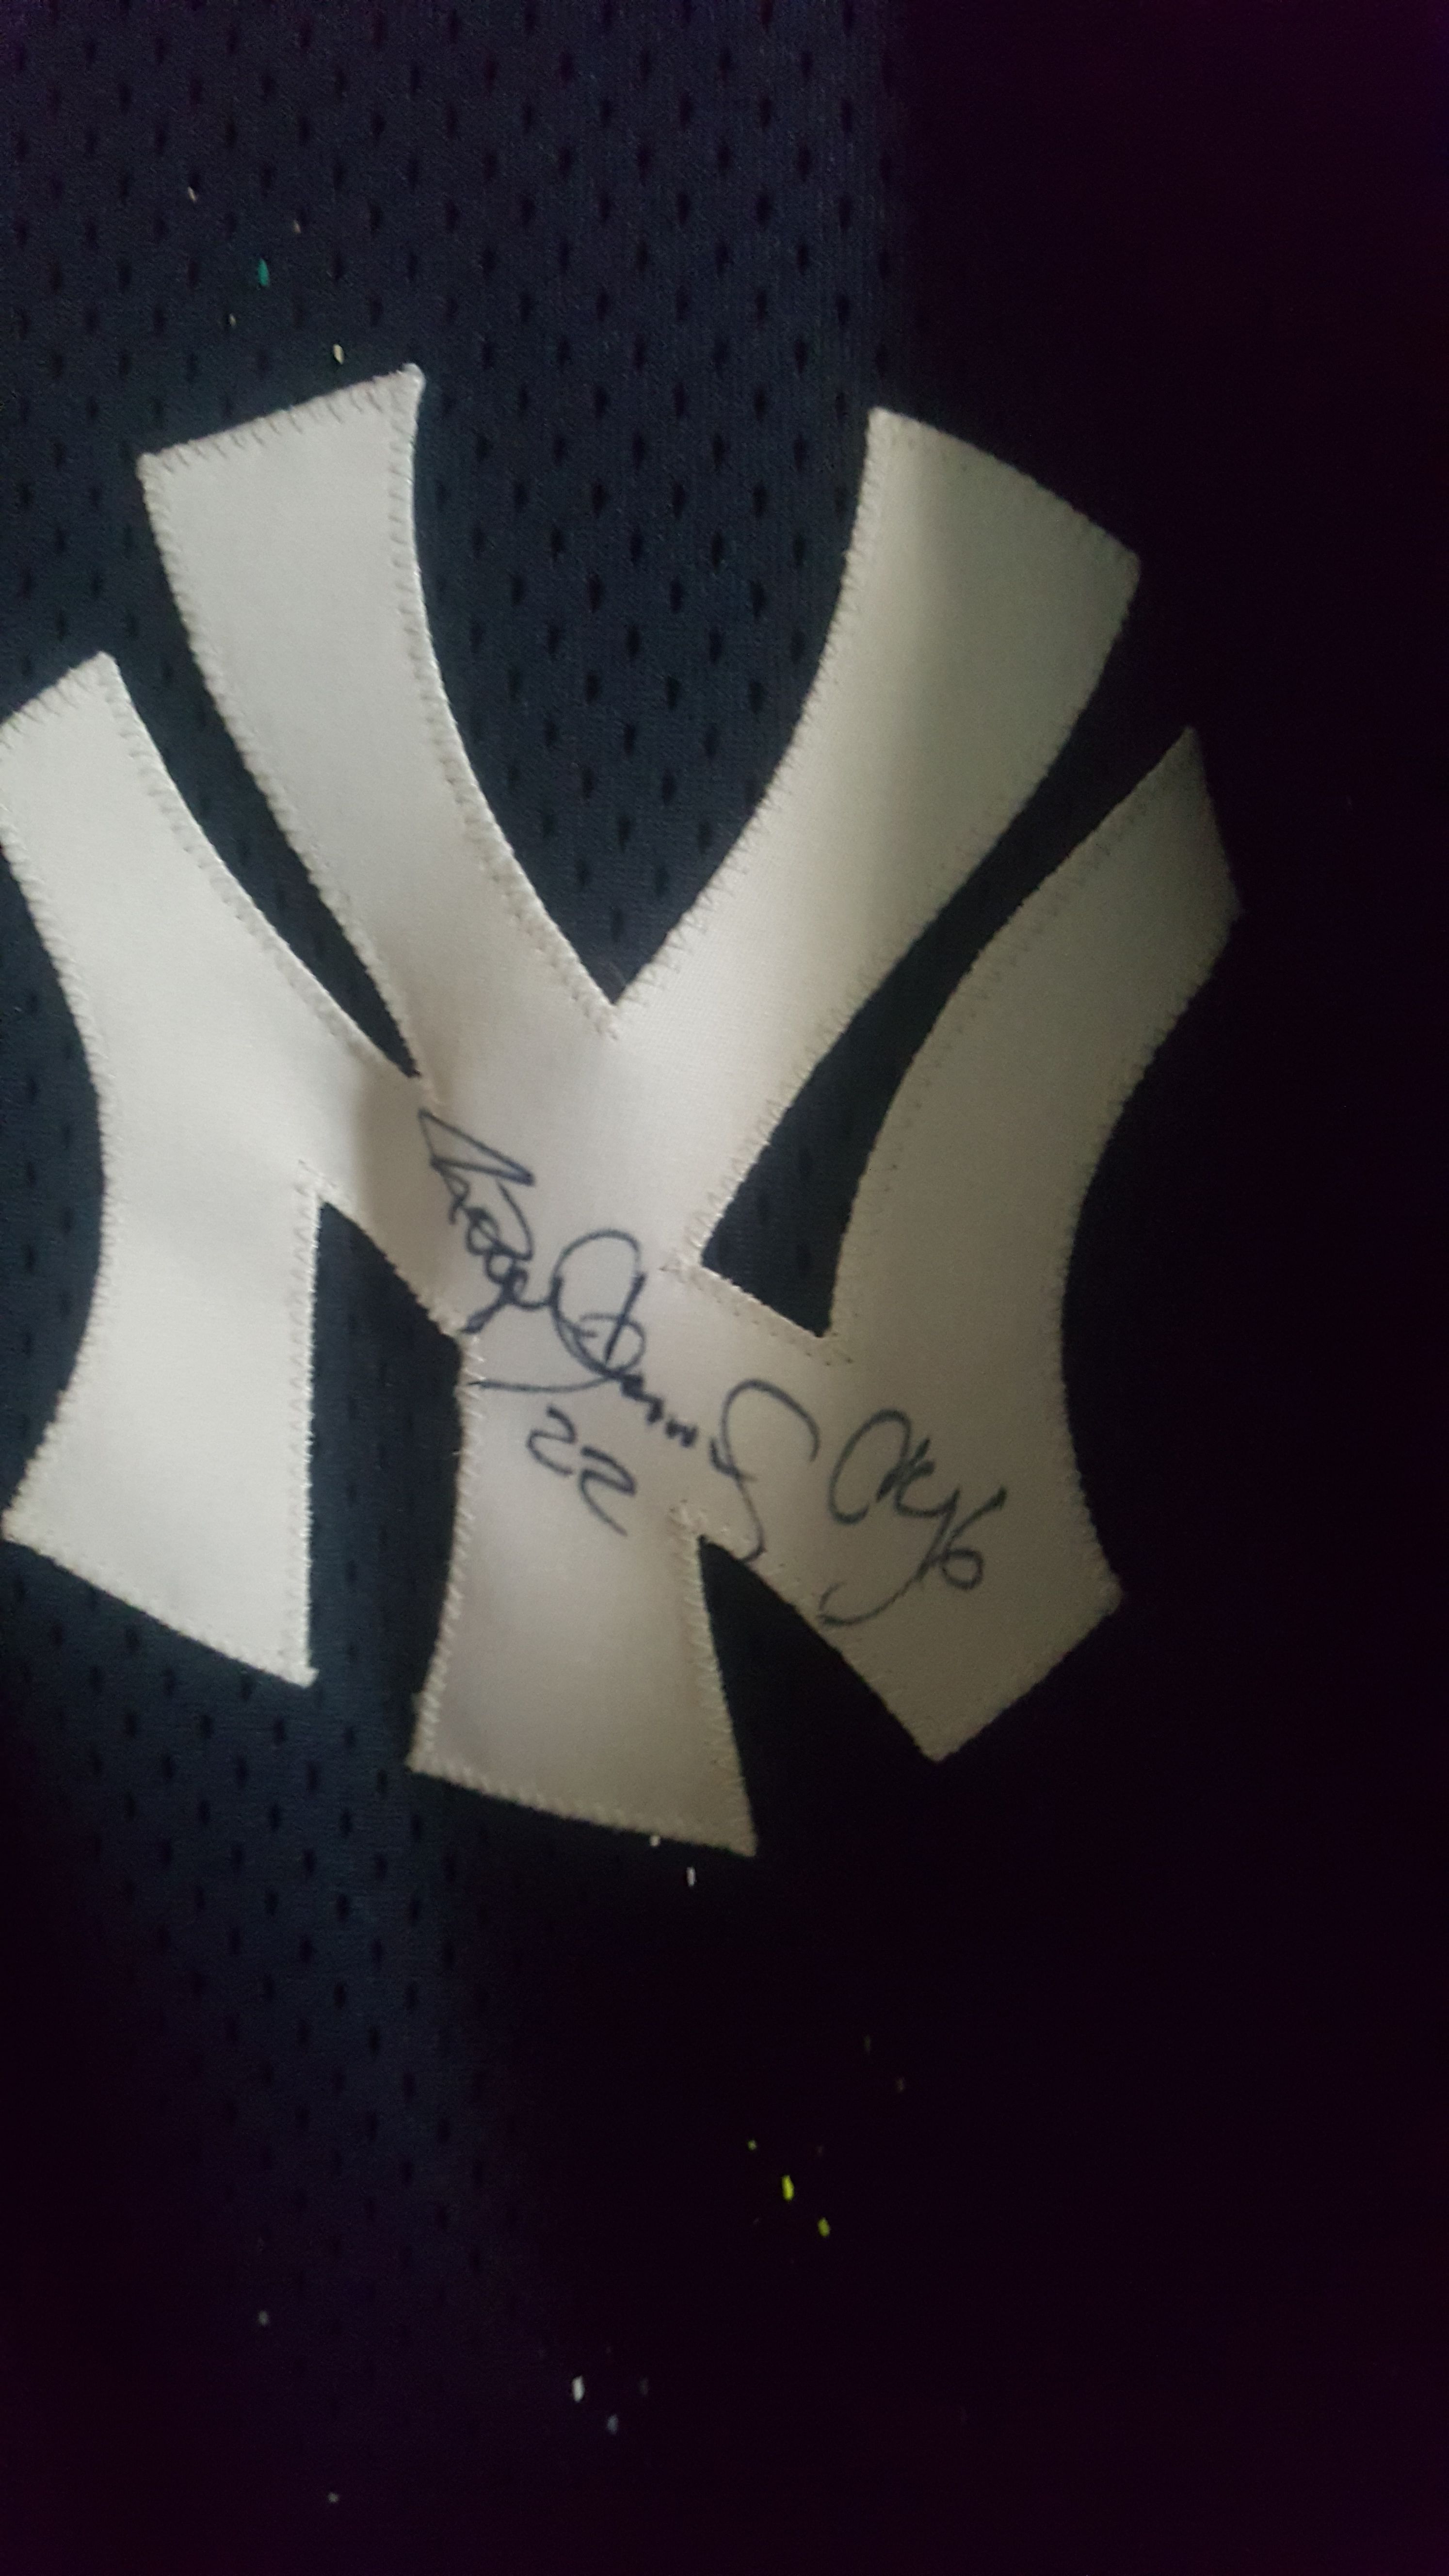 autographed newyork yankees jersey